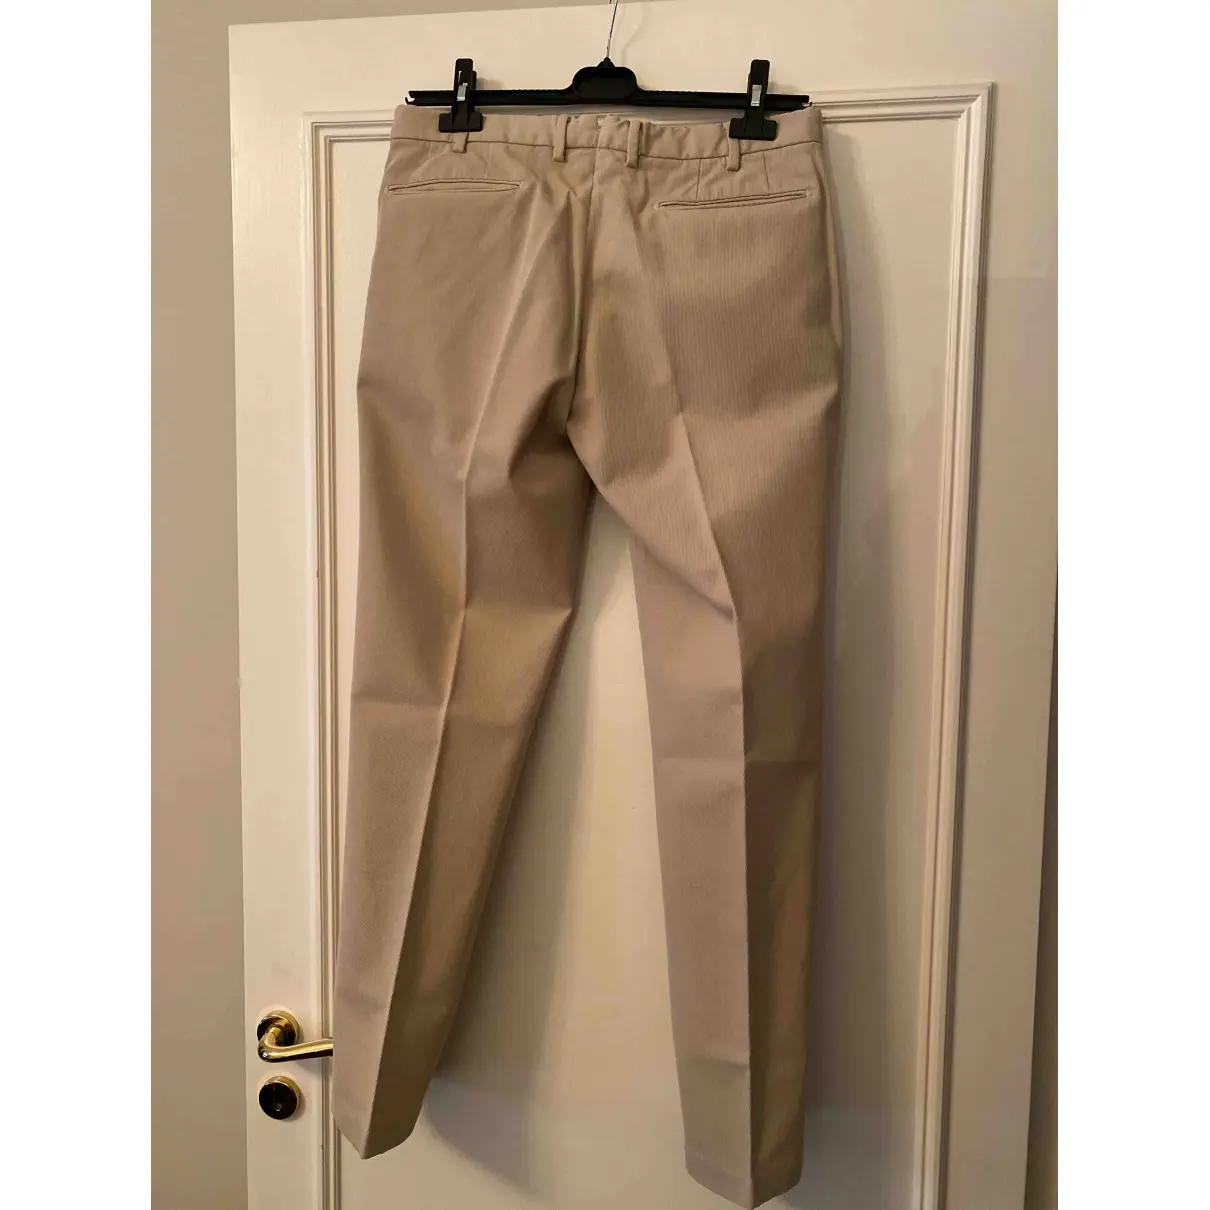 Buy Incotex Trousers online - Vintage